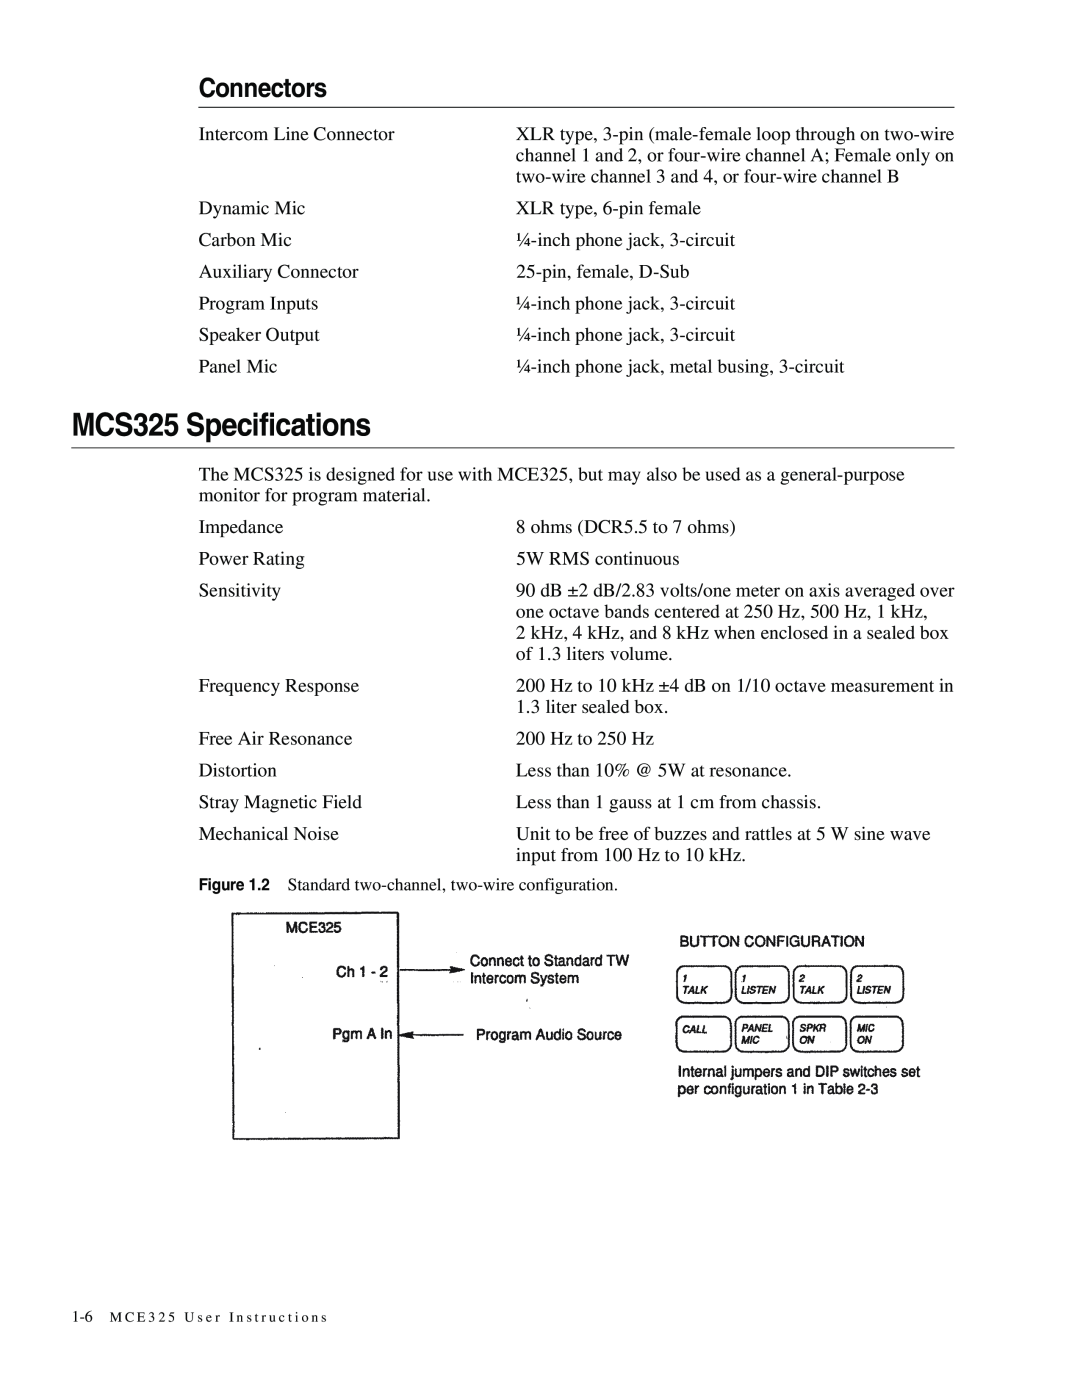 Telex MCE325 manual MCS325 Specifications, Connectors 